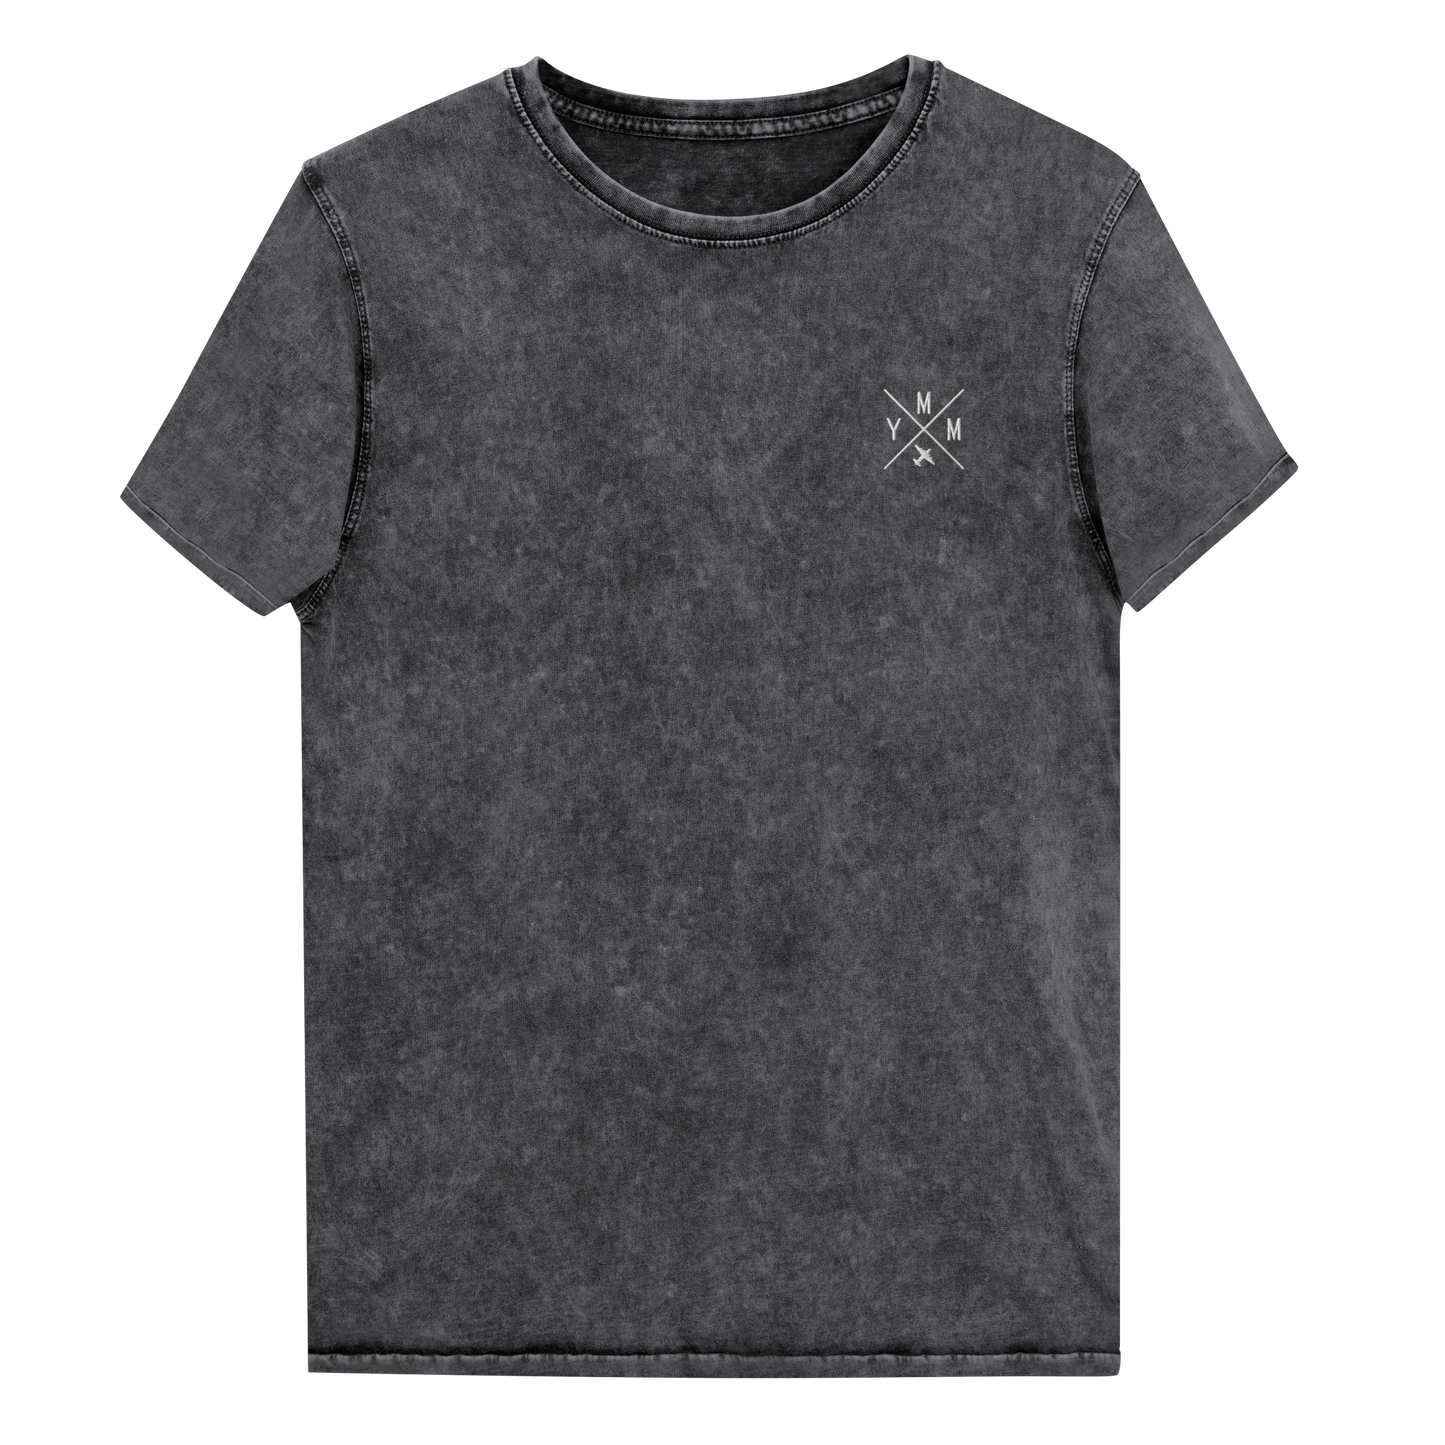 Crossed-X Denim T-Shirt • YMM Fort McMurray • YHM Designs - Image 02